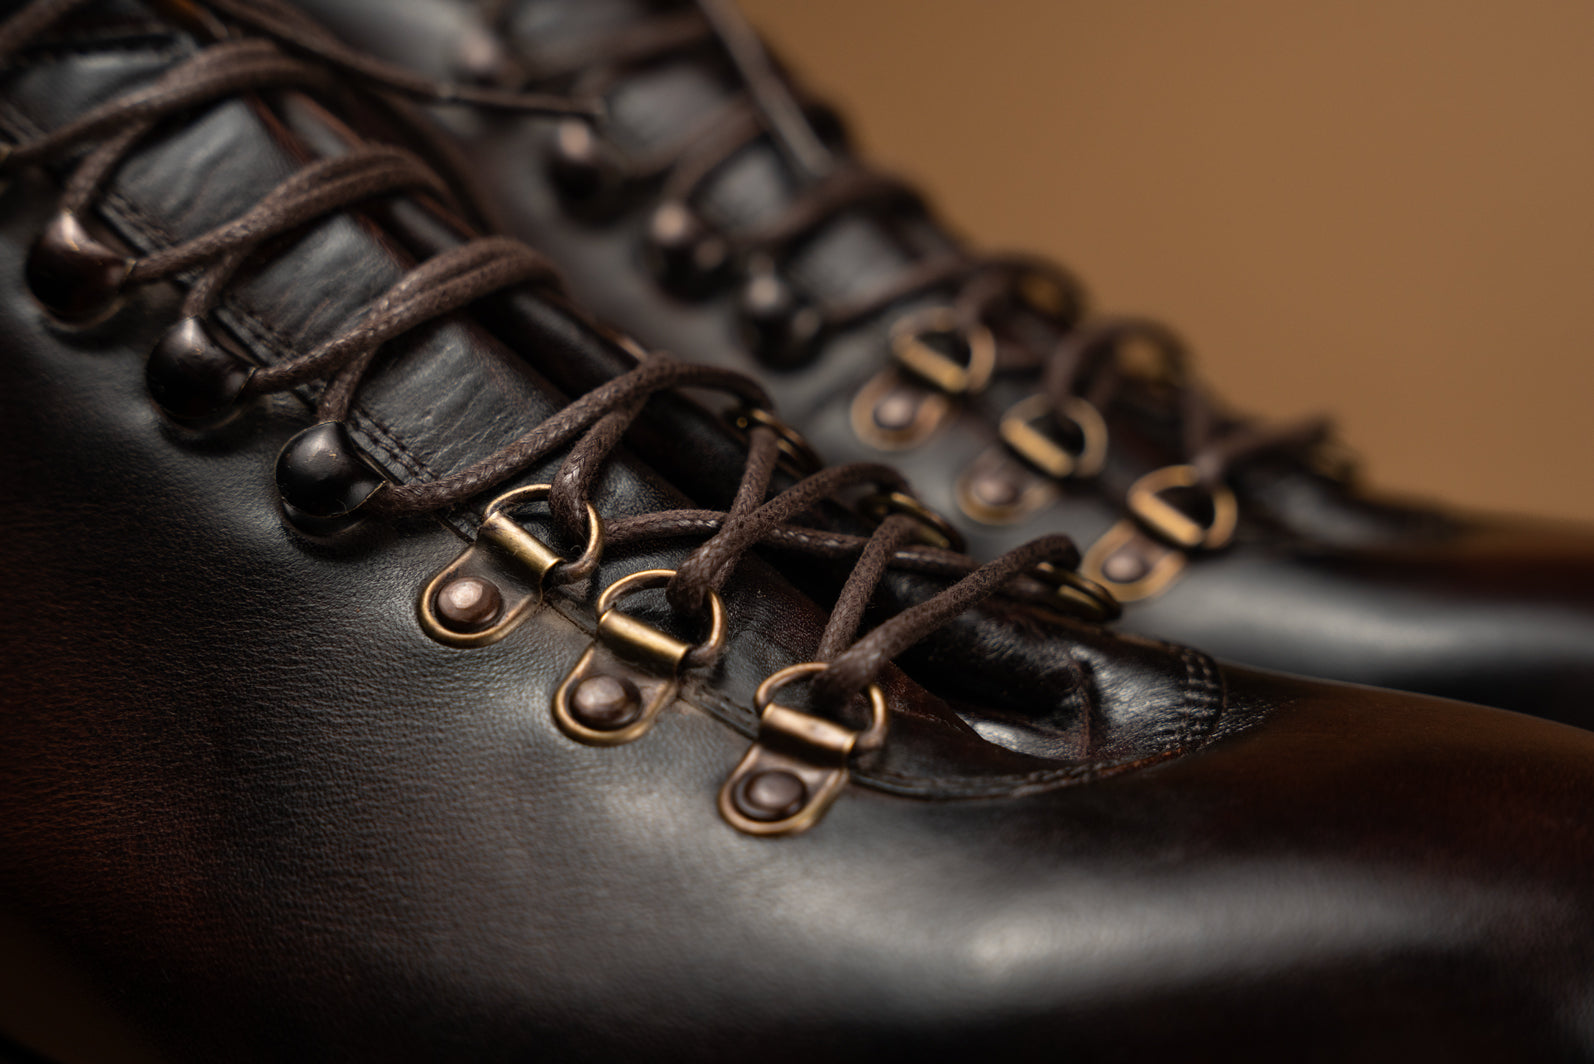 Bosphorus Leather Hiking Boots - Kailash Dark Brown